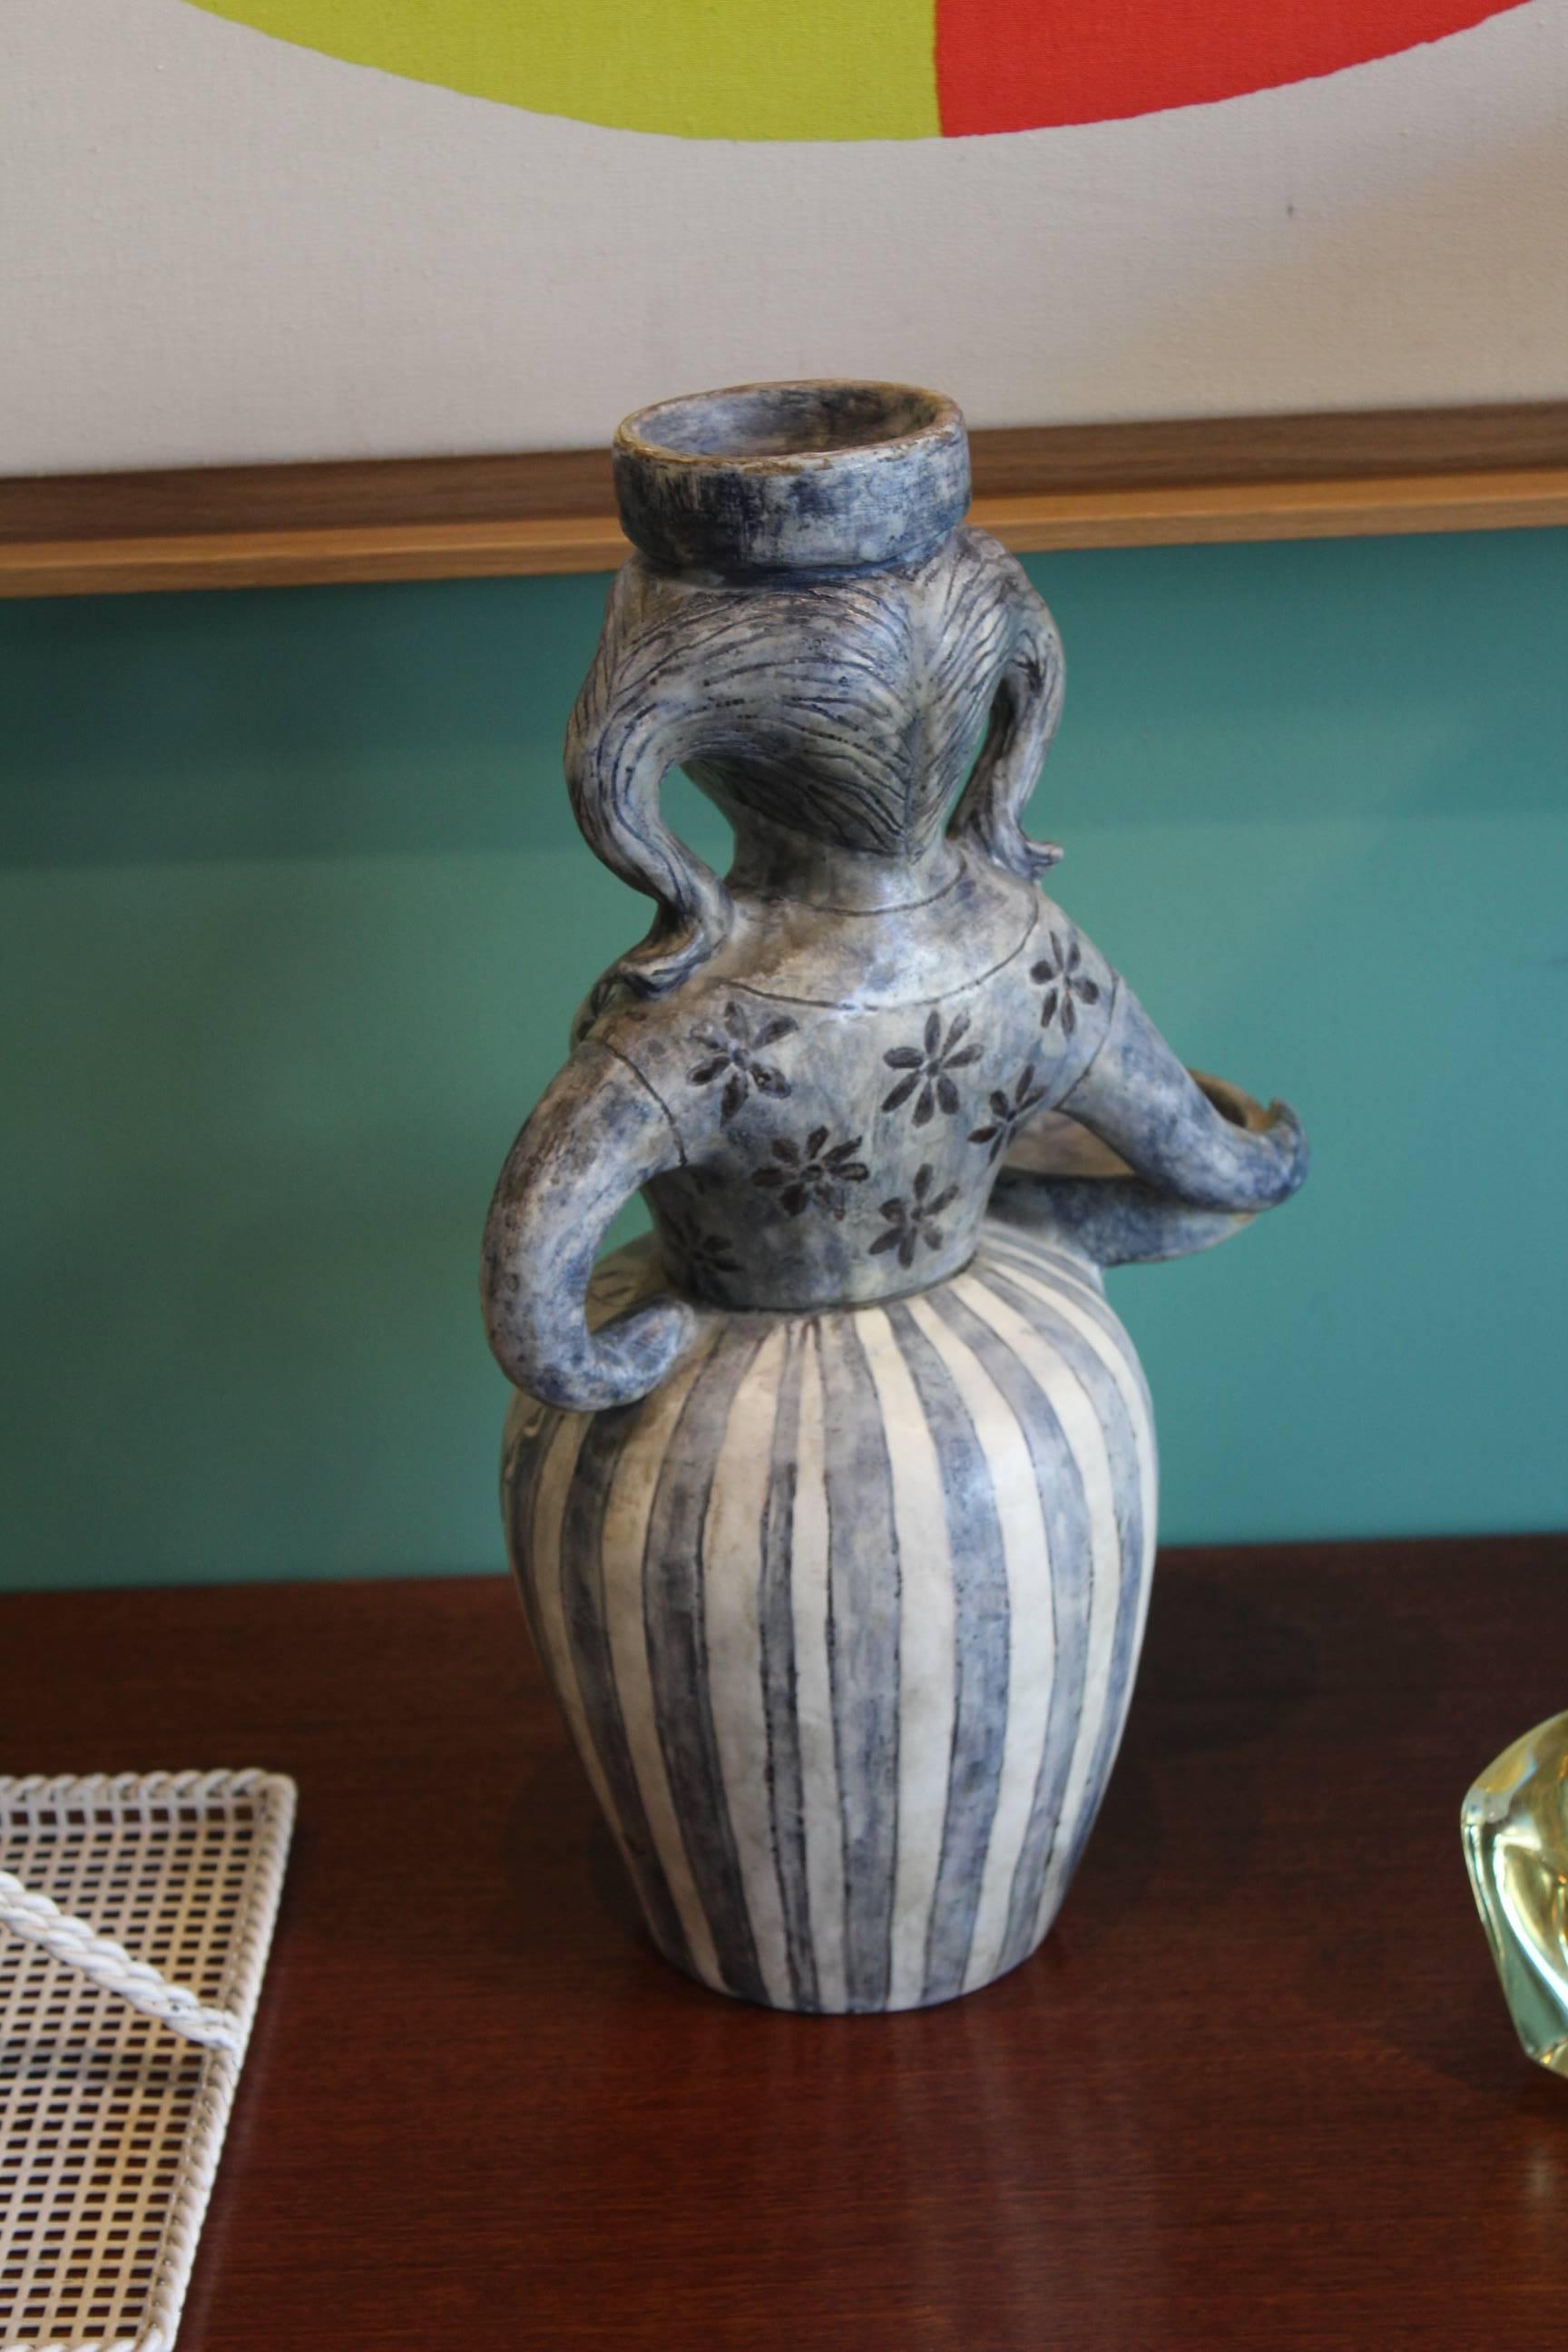 Beautiful figurative ceramic vase by Rhodi (Paris), signed, circa 1960, in excellent condition.